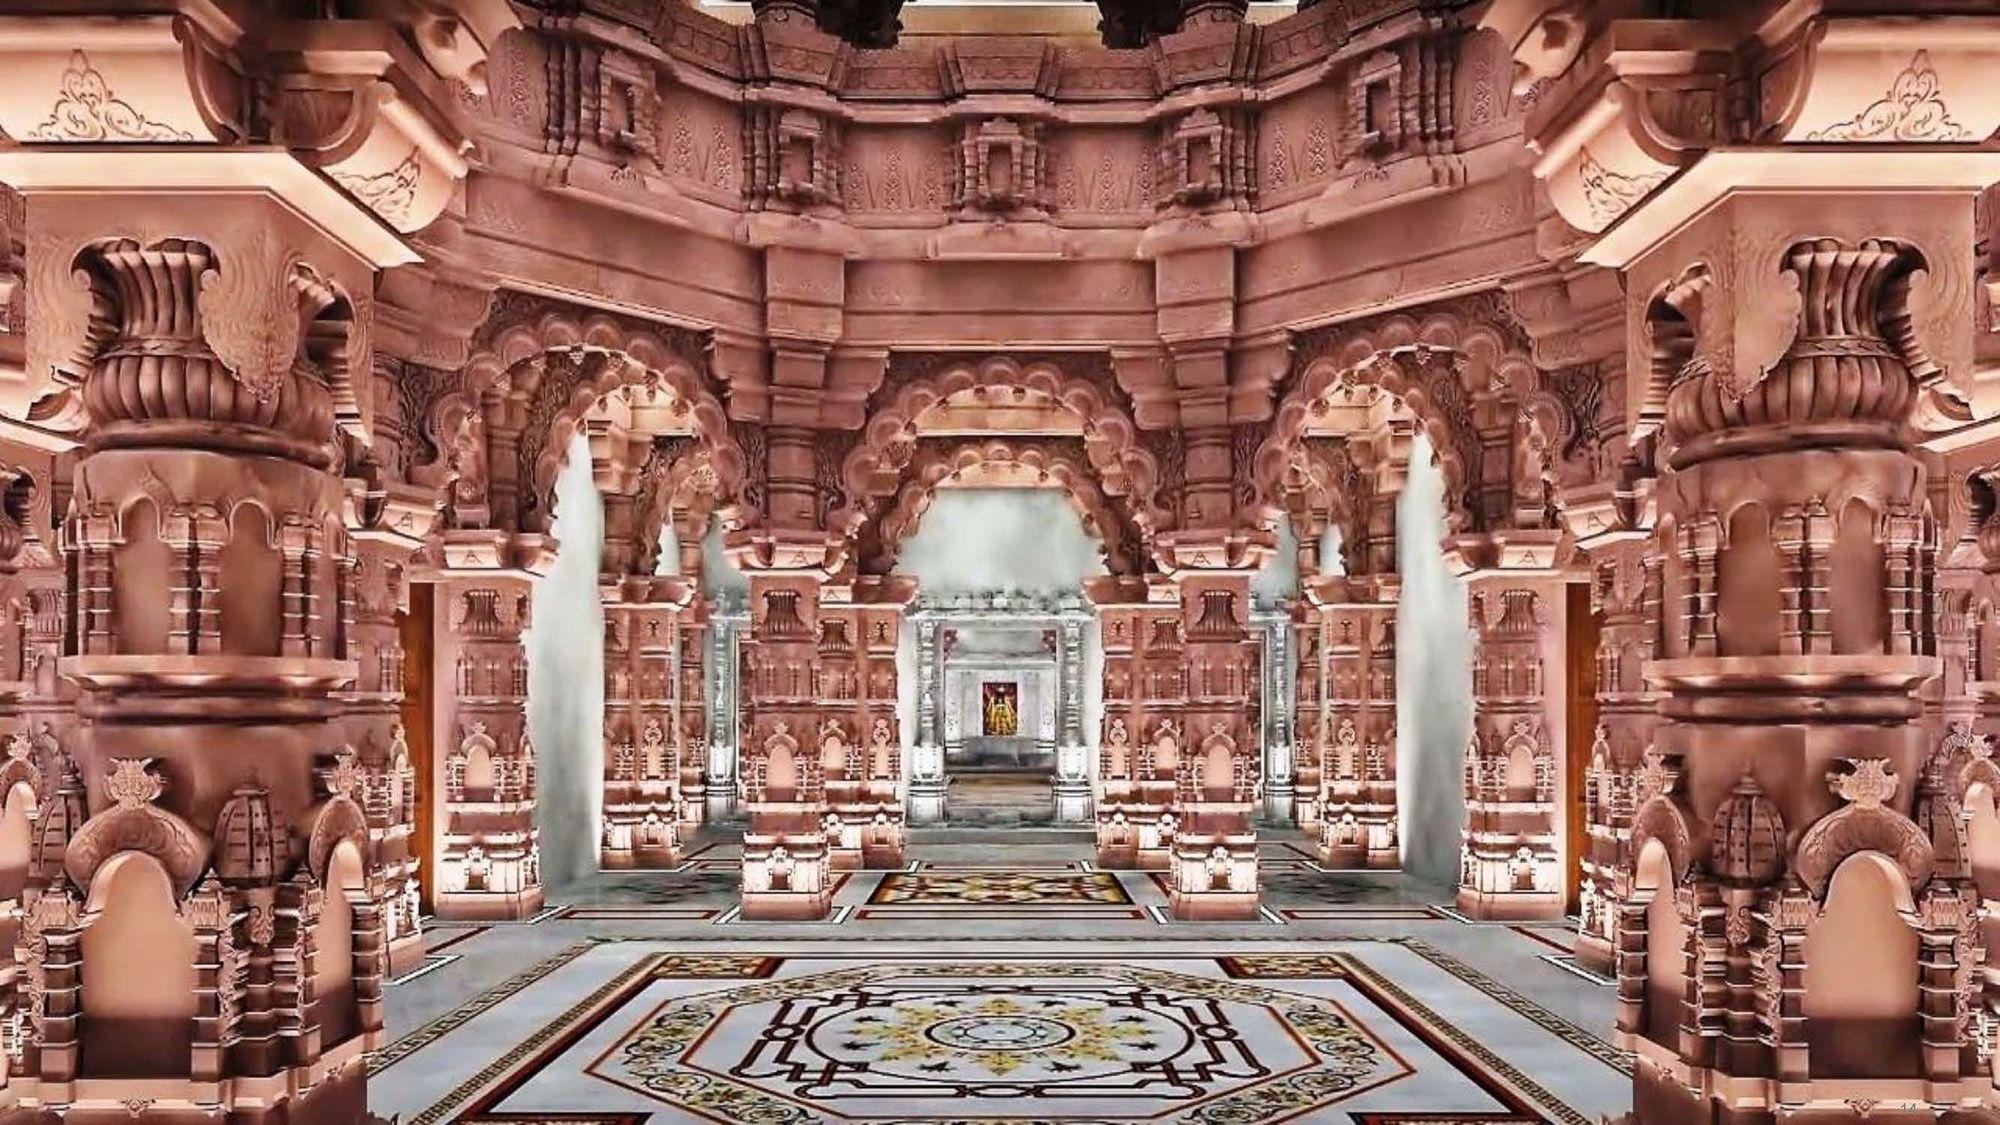 Ayodhya Ram Mandir: History And Faith Of All Indian